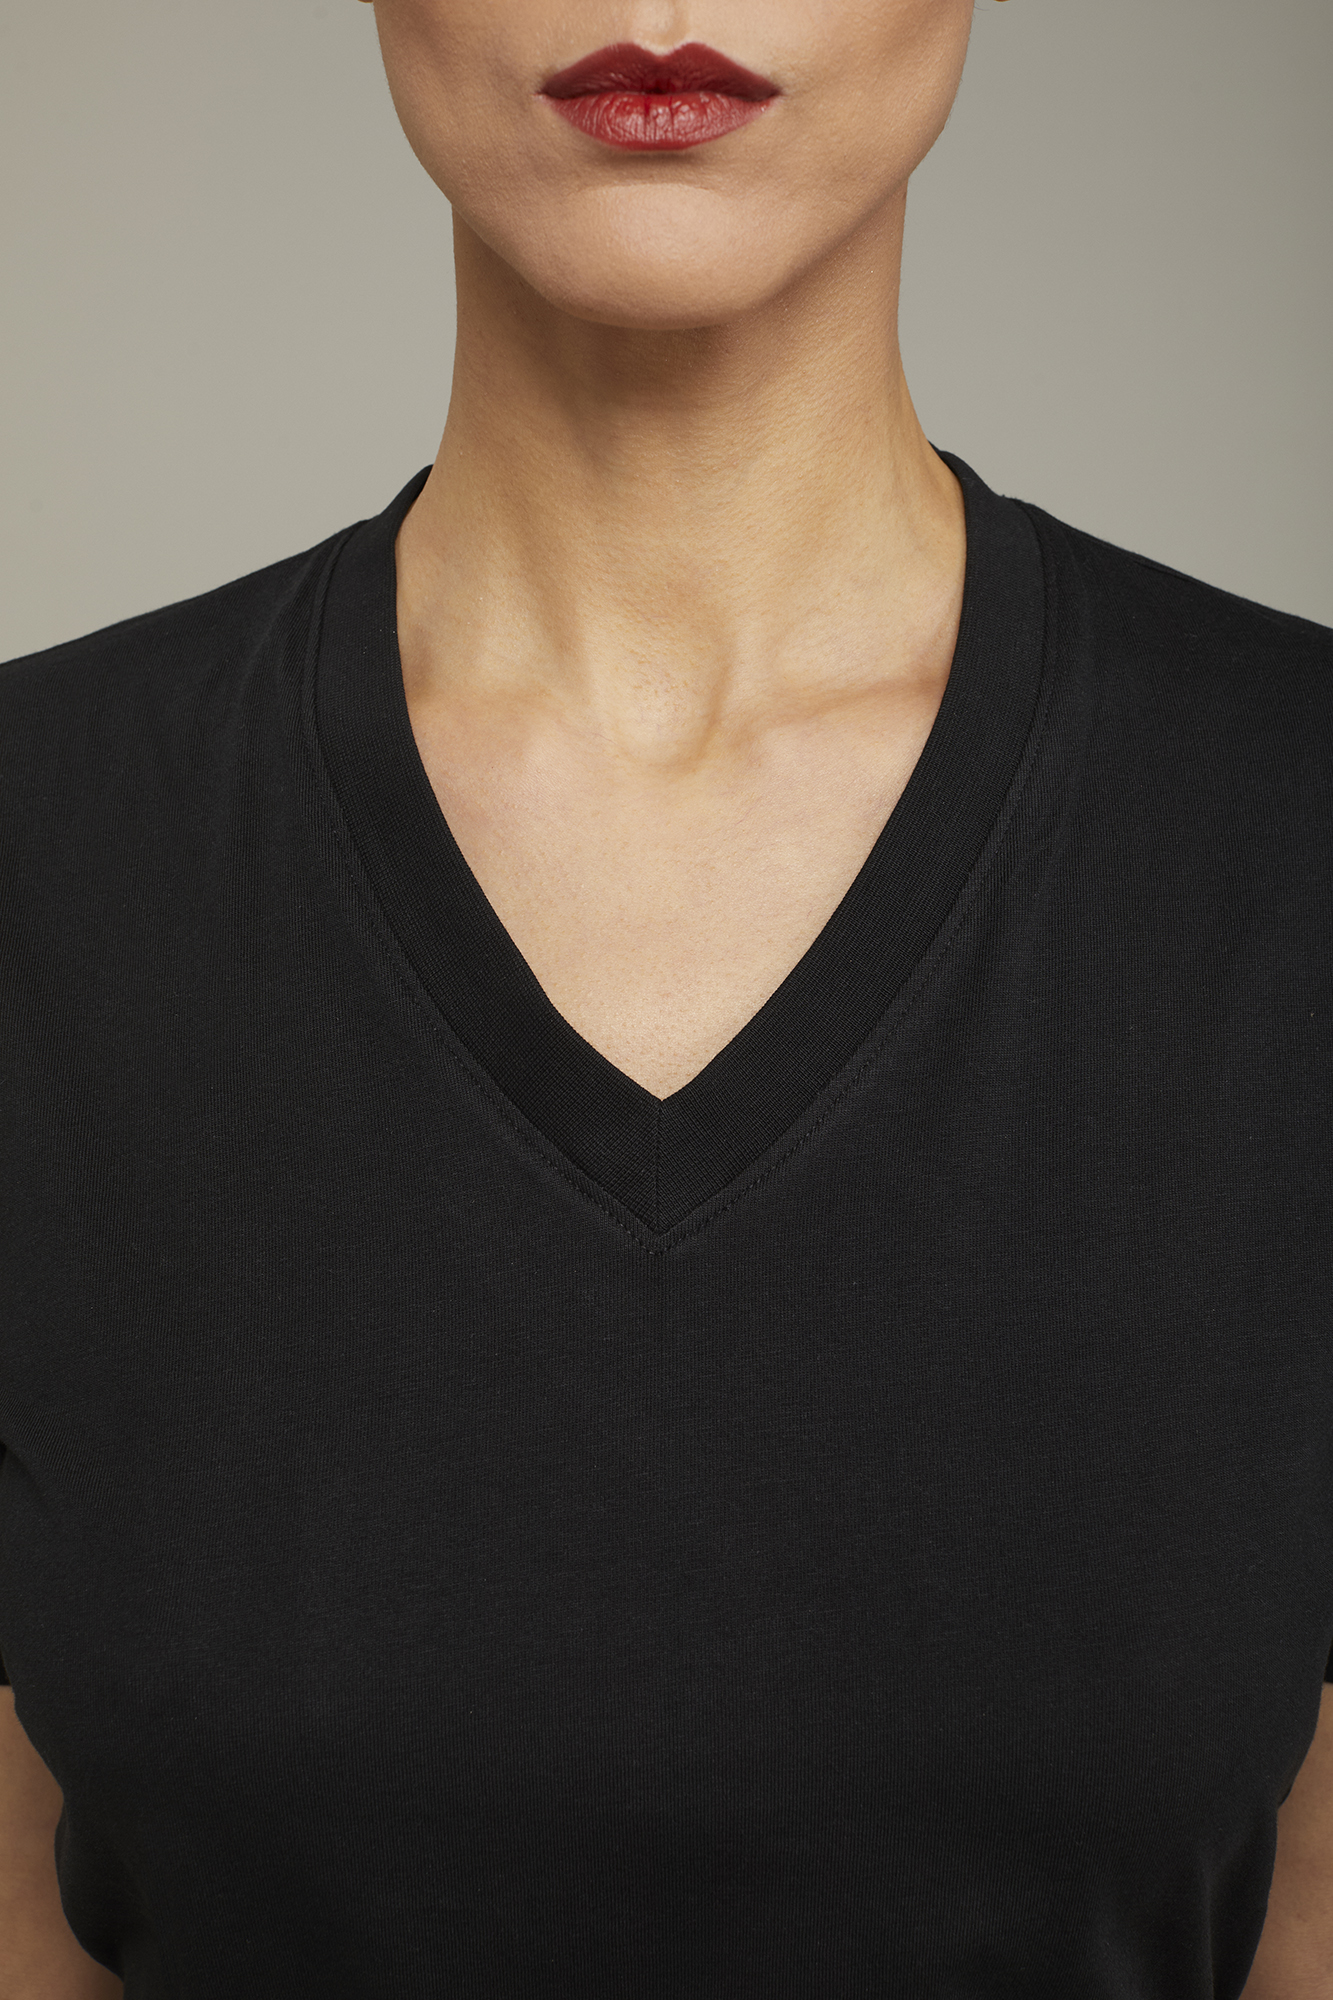 Women’s v-neck t-shirt 100% cotton regular fit image number null